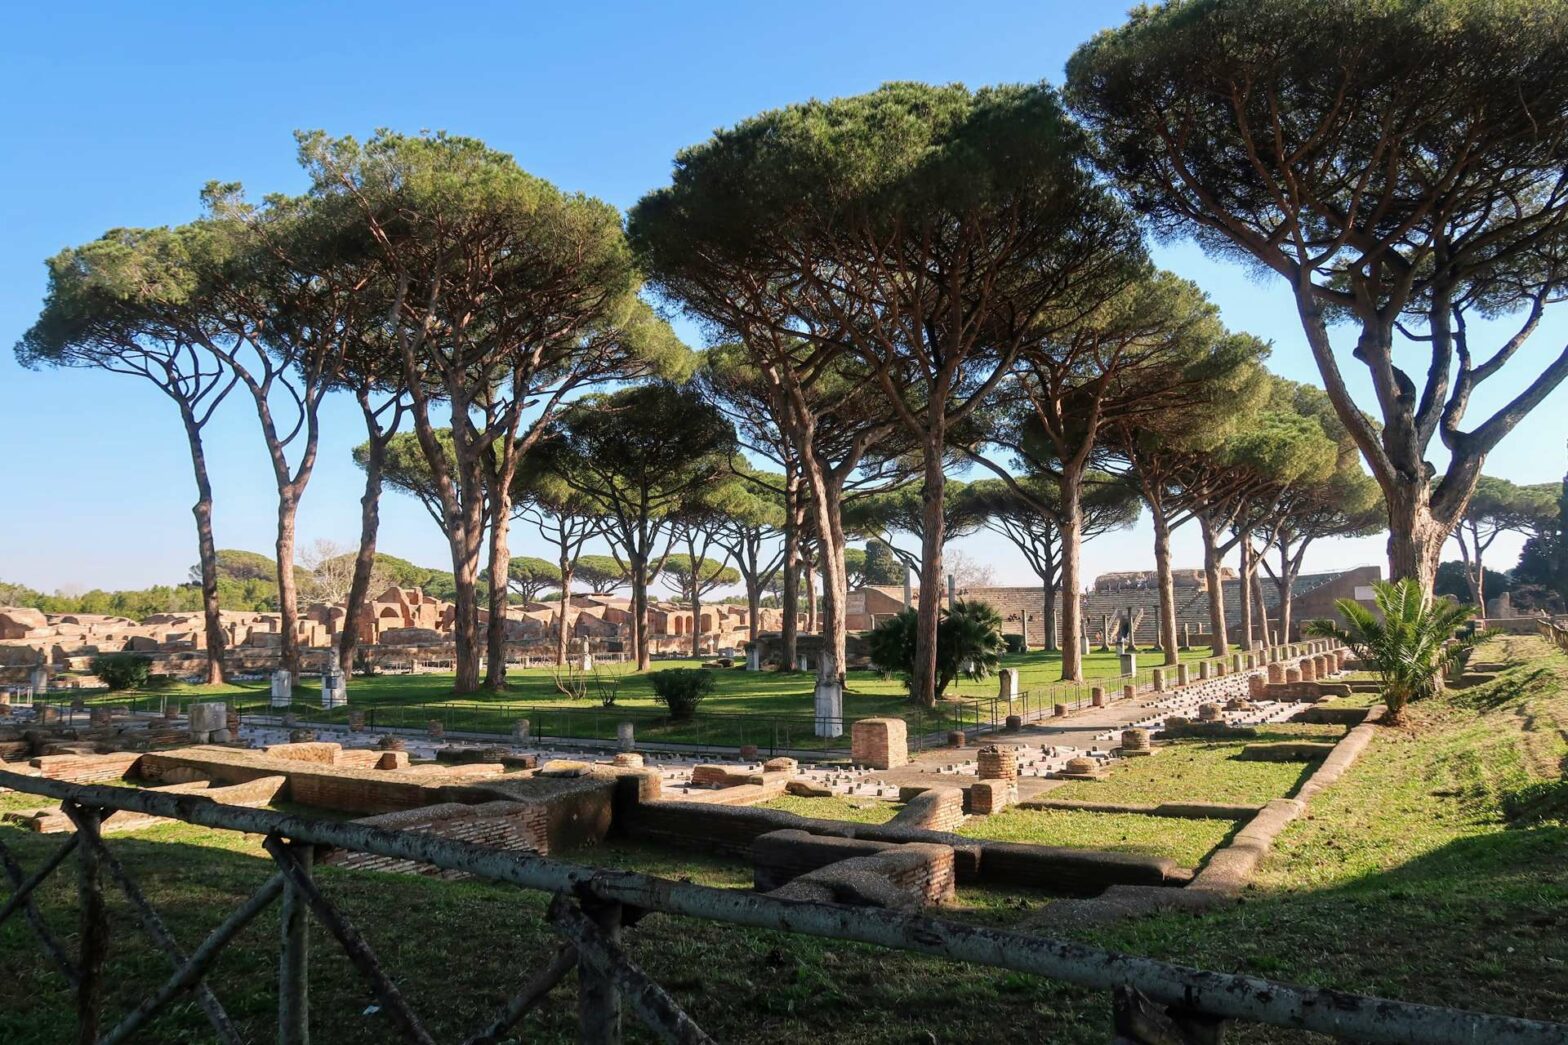 Roman Ruins at Ostia Antica near Rome, Italy